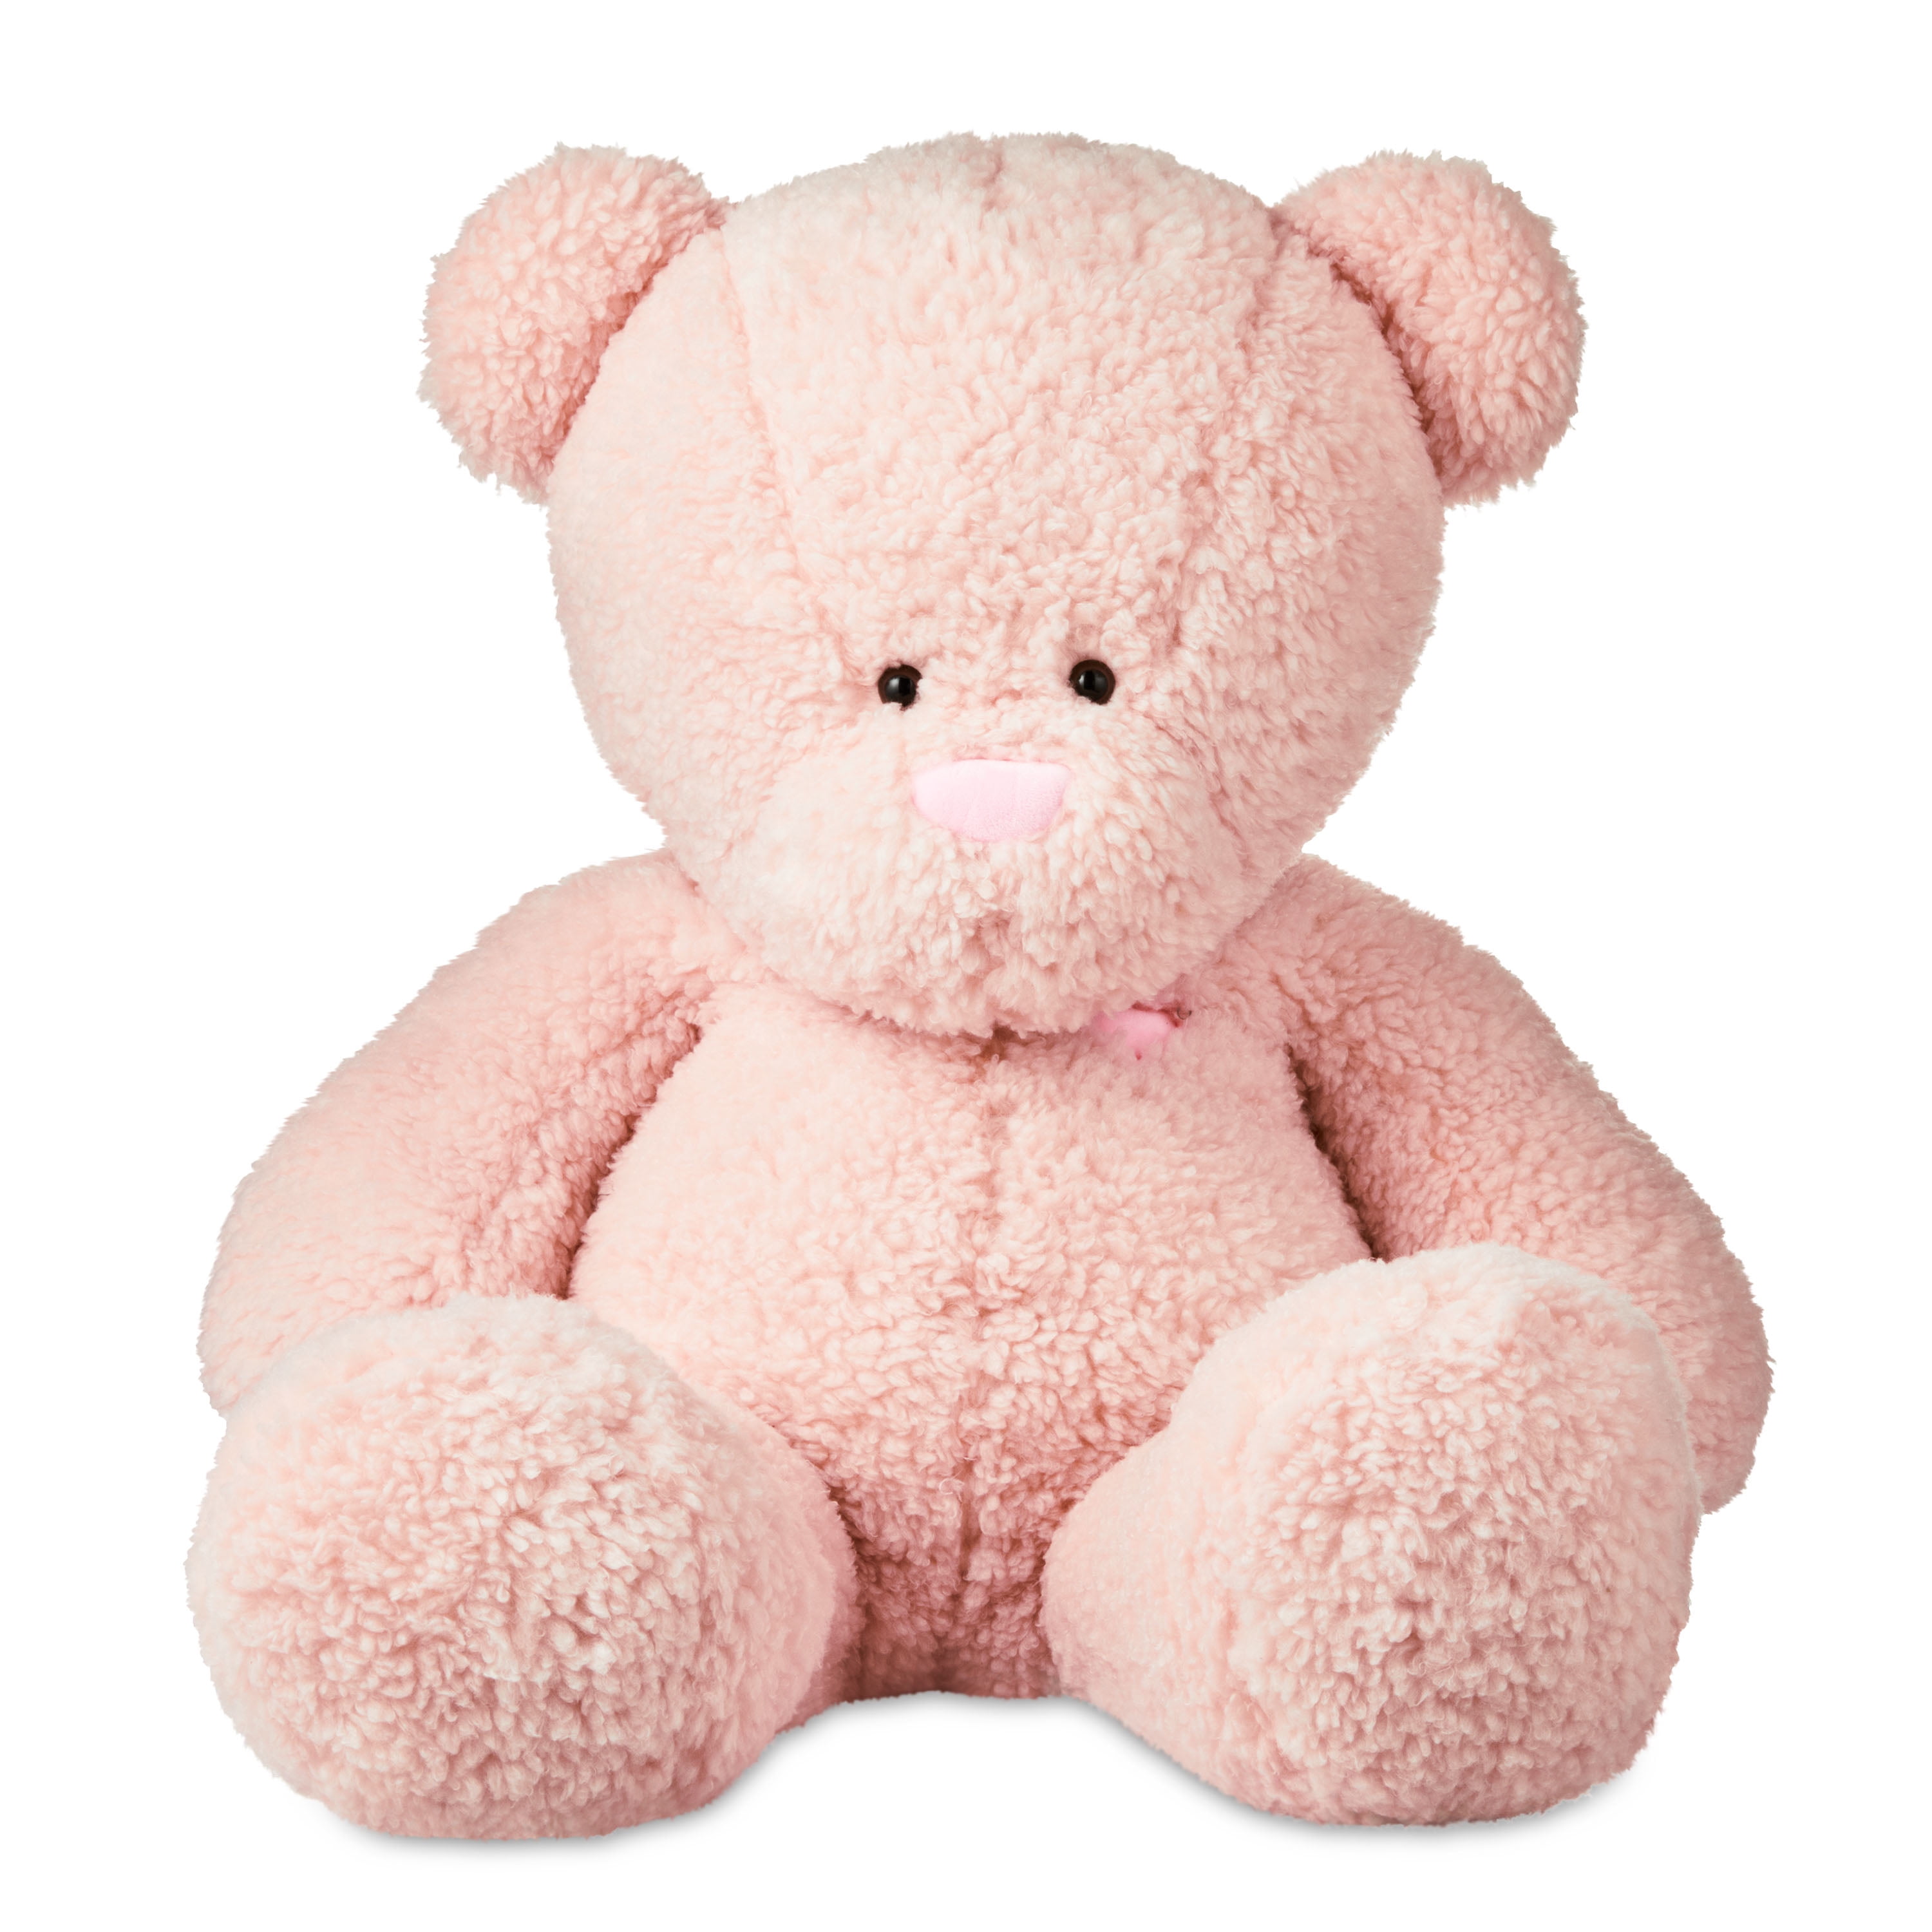 Valentine's Day Jumbo Pink Bear Plush Toy, 26", by Way To Celebrate